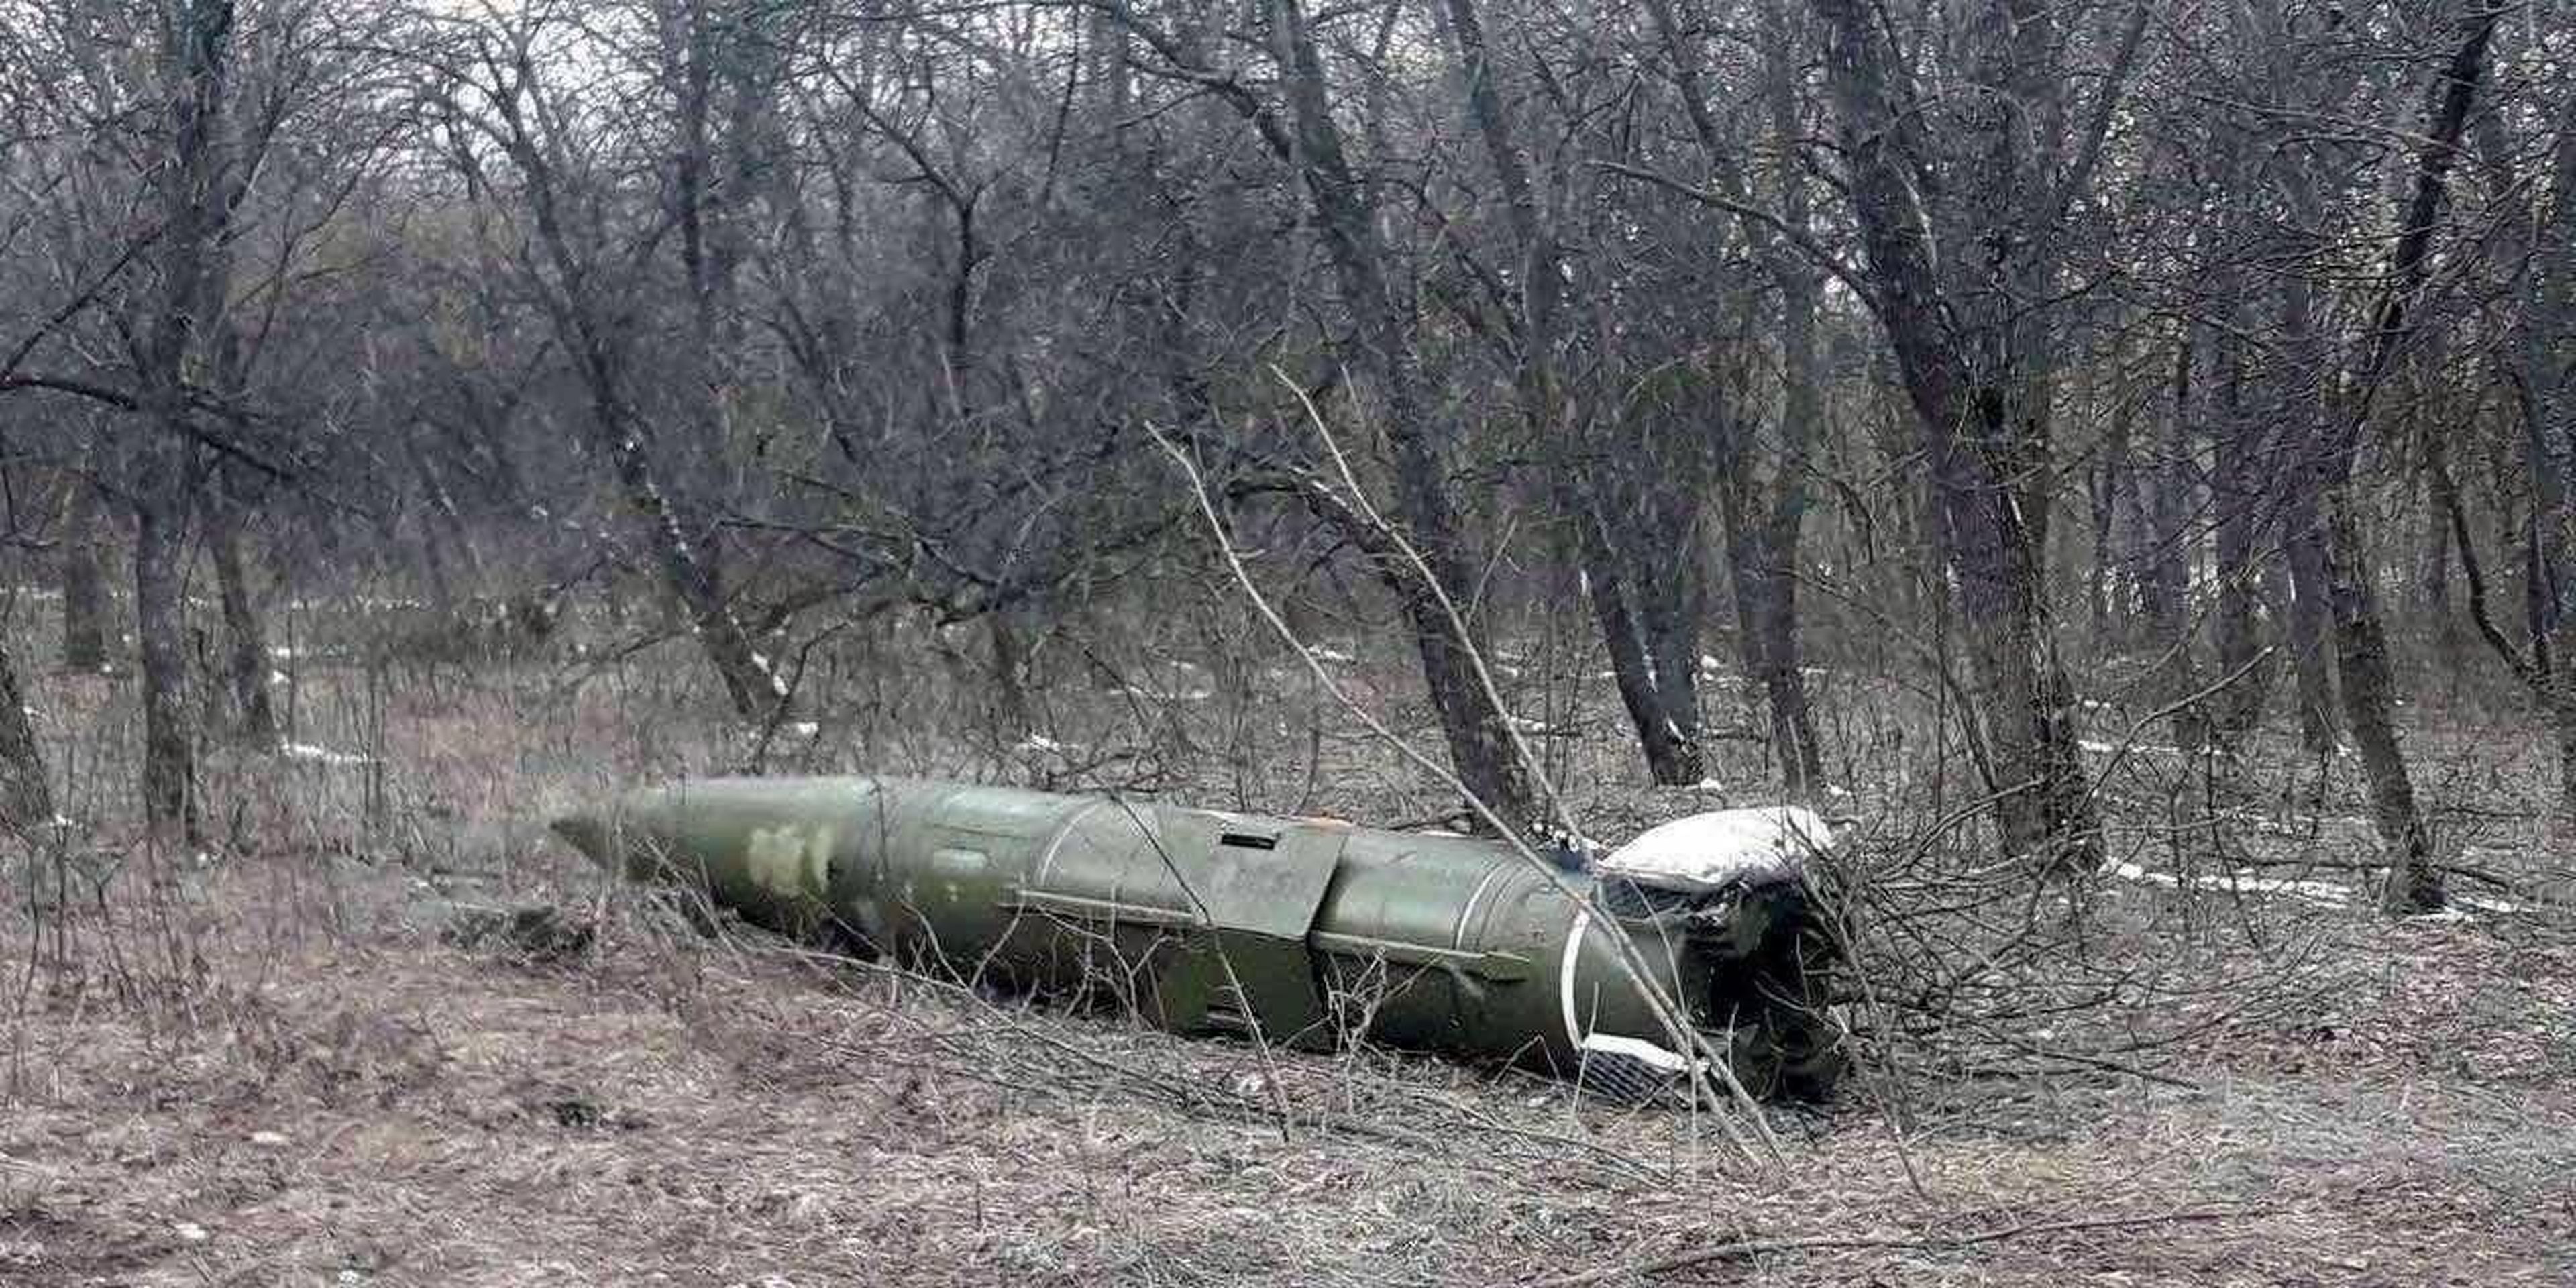 A Russian short-range ballistic missile, believed to be an unexploded Iskander missile, was found near Kramatorsk, Ukraine.